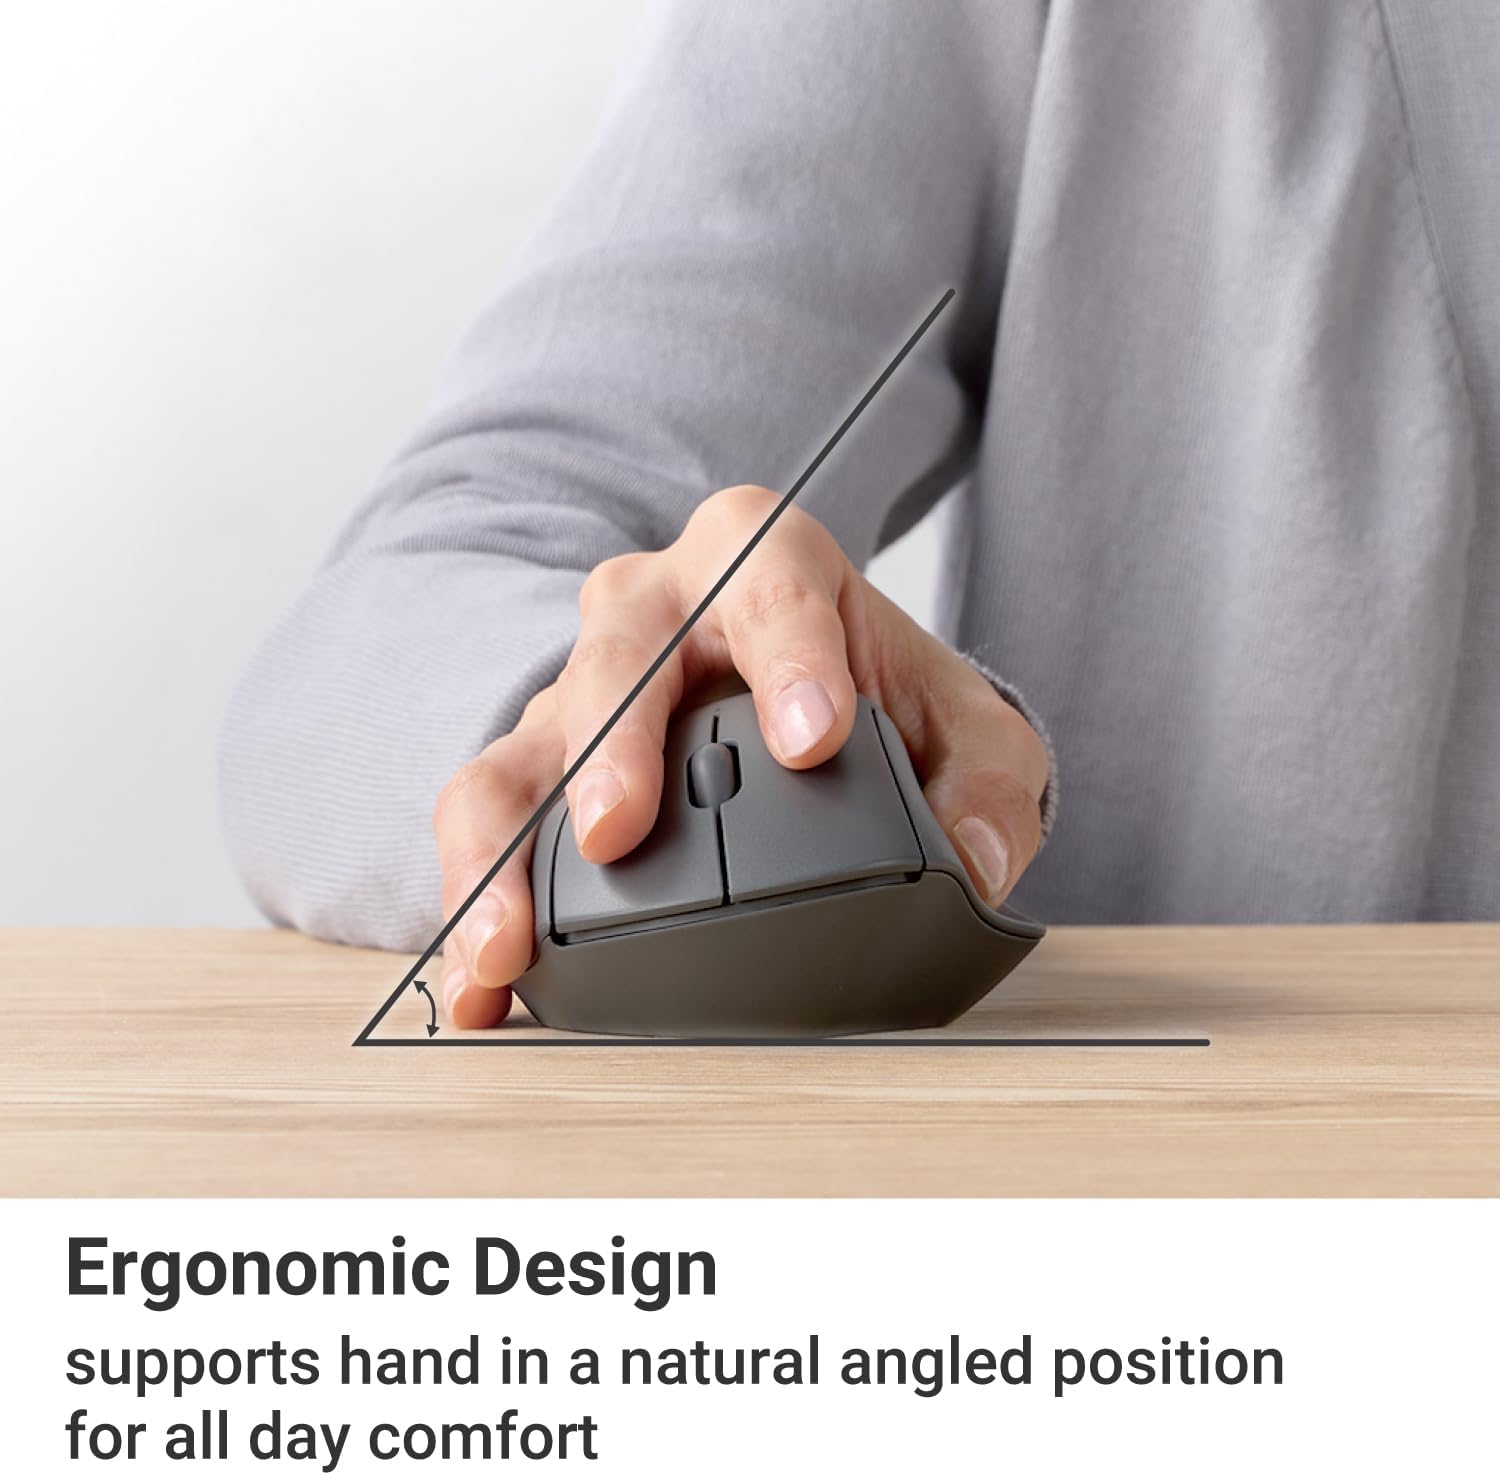 ELECOM Ergonomic Shape Wireless Mouse SHELLPA